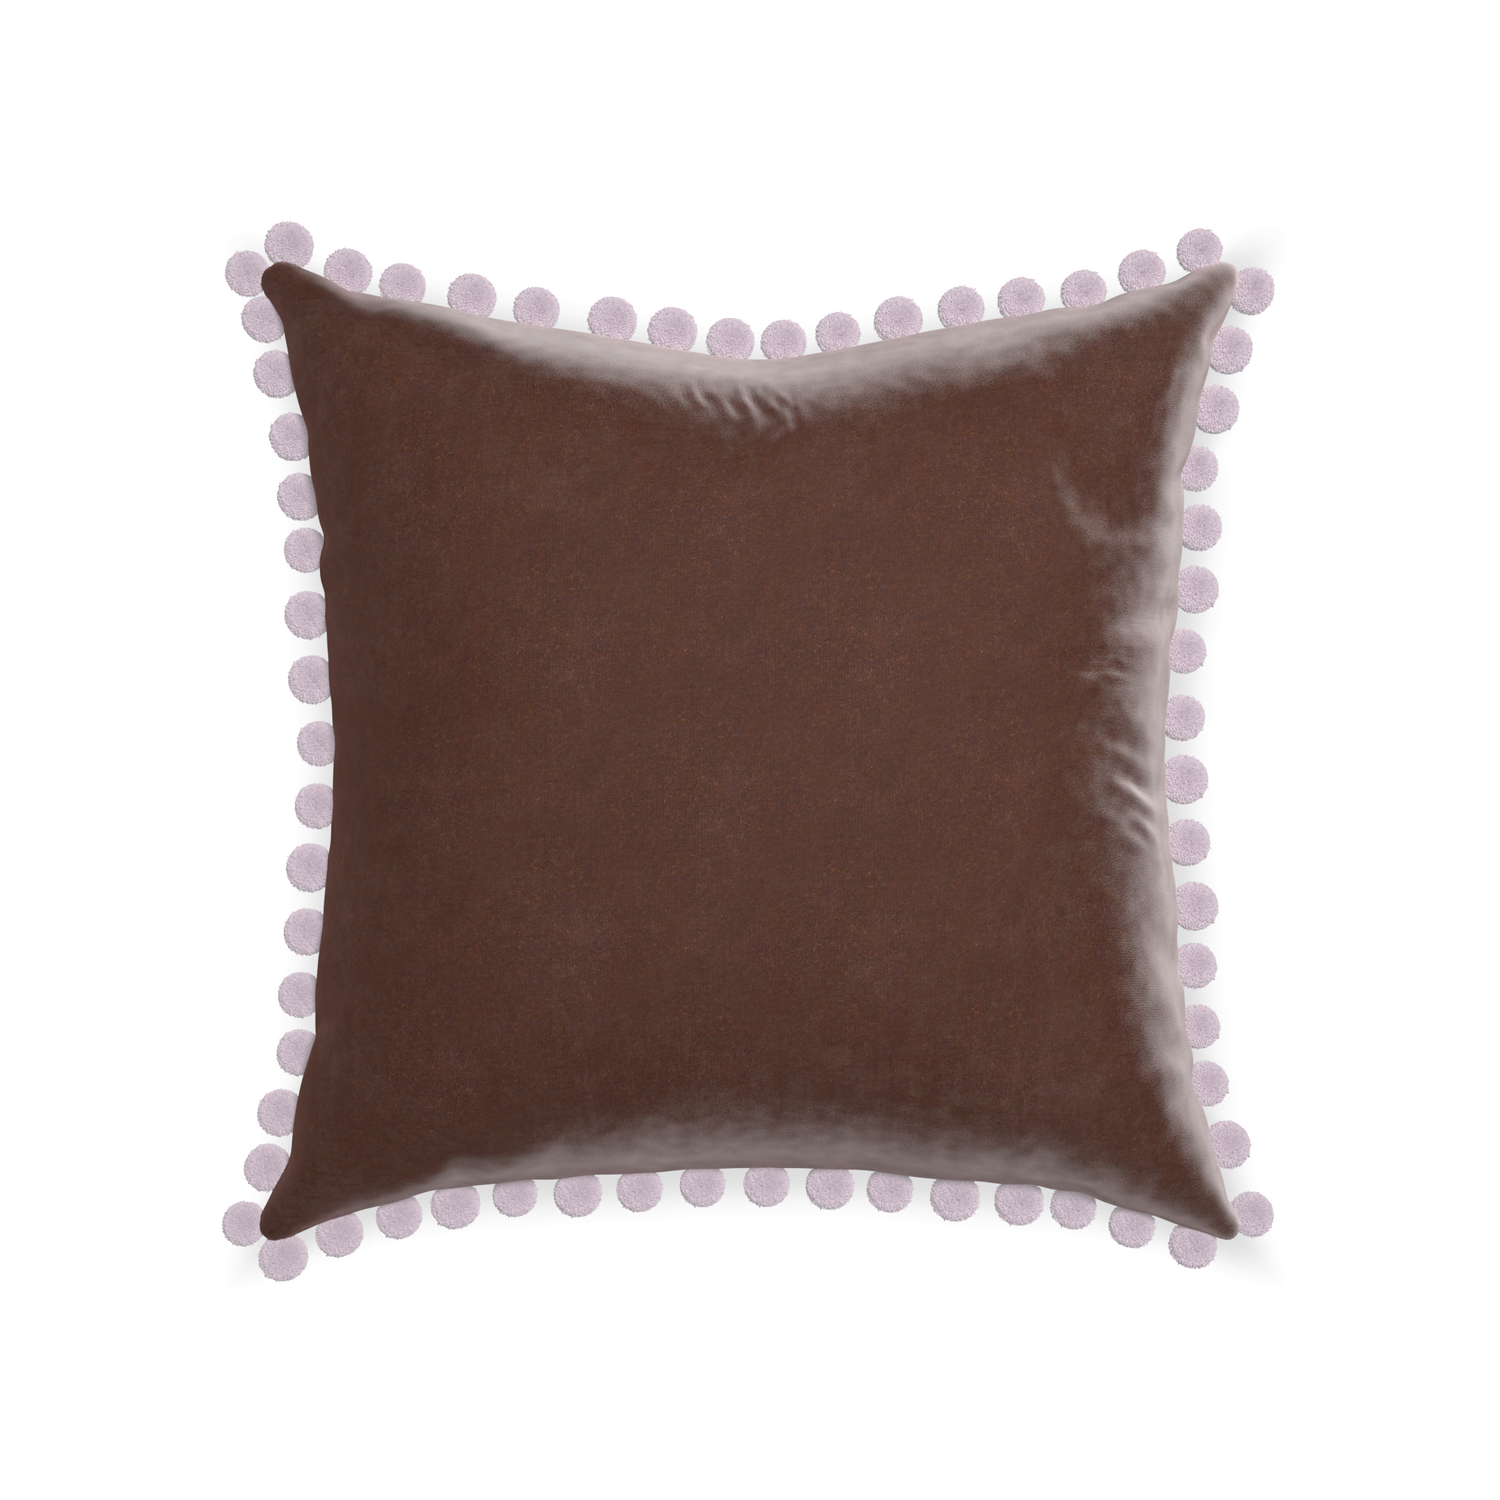 square brown velvet pillow with lilac pom poms